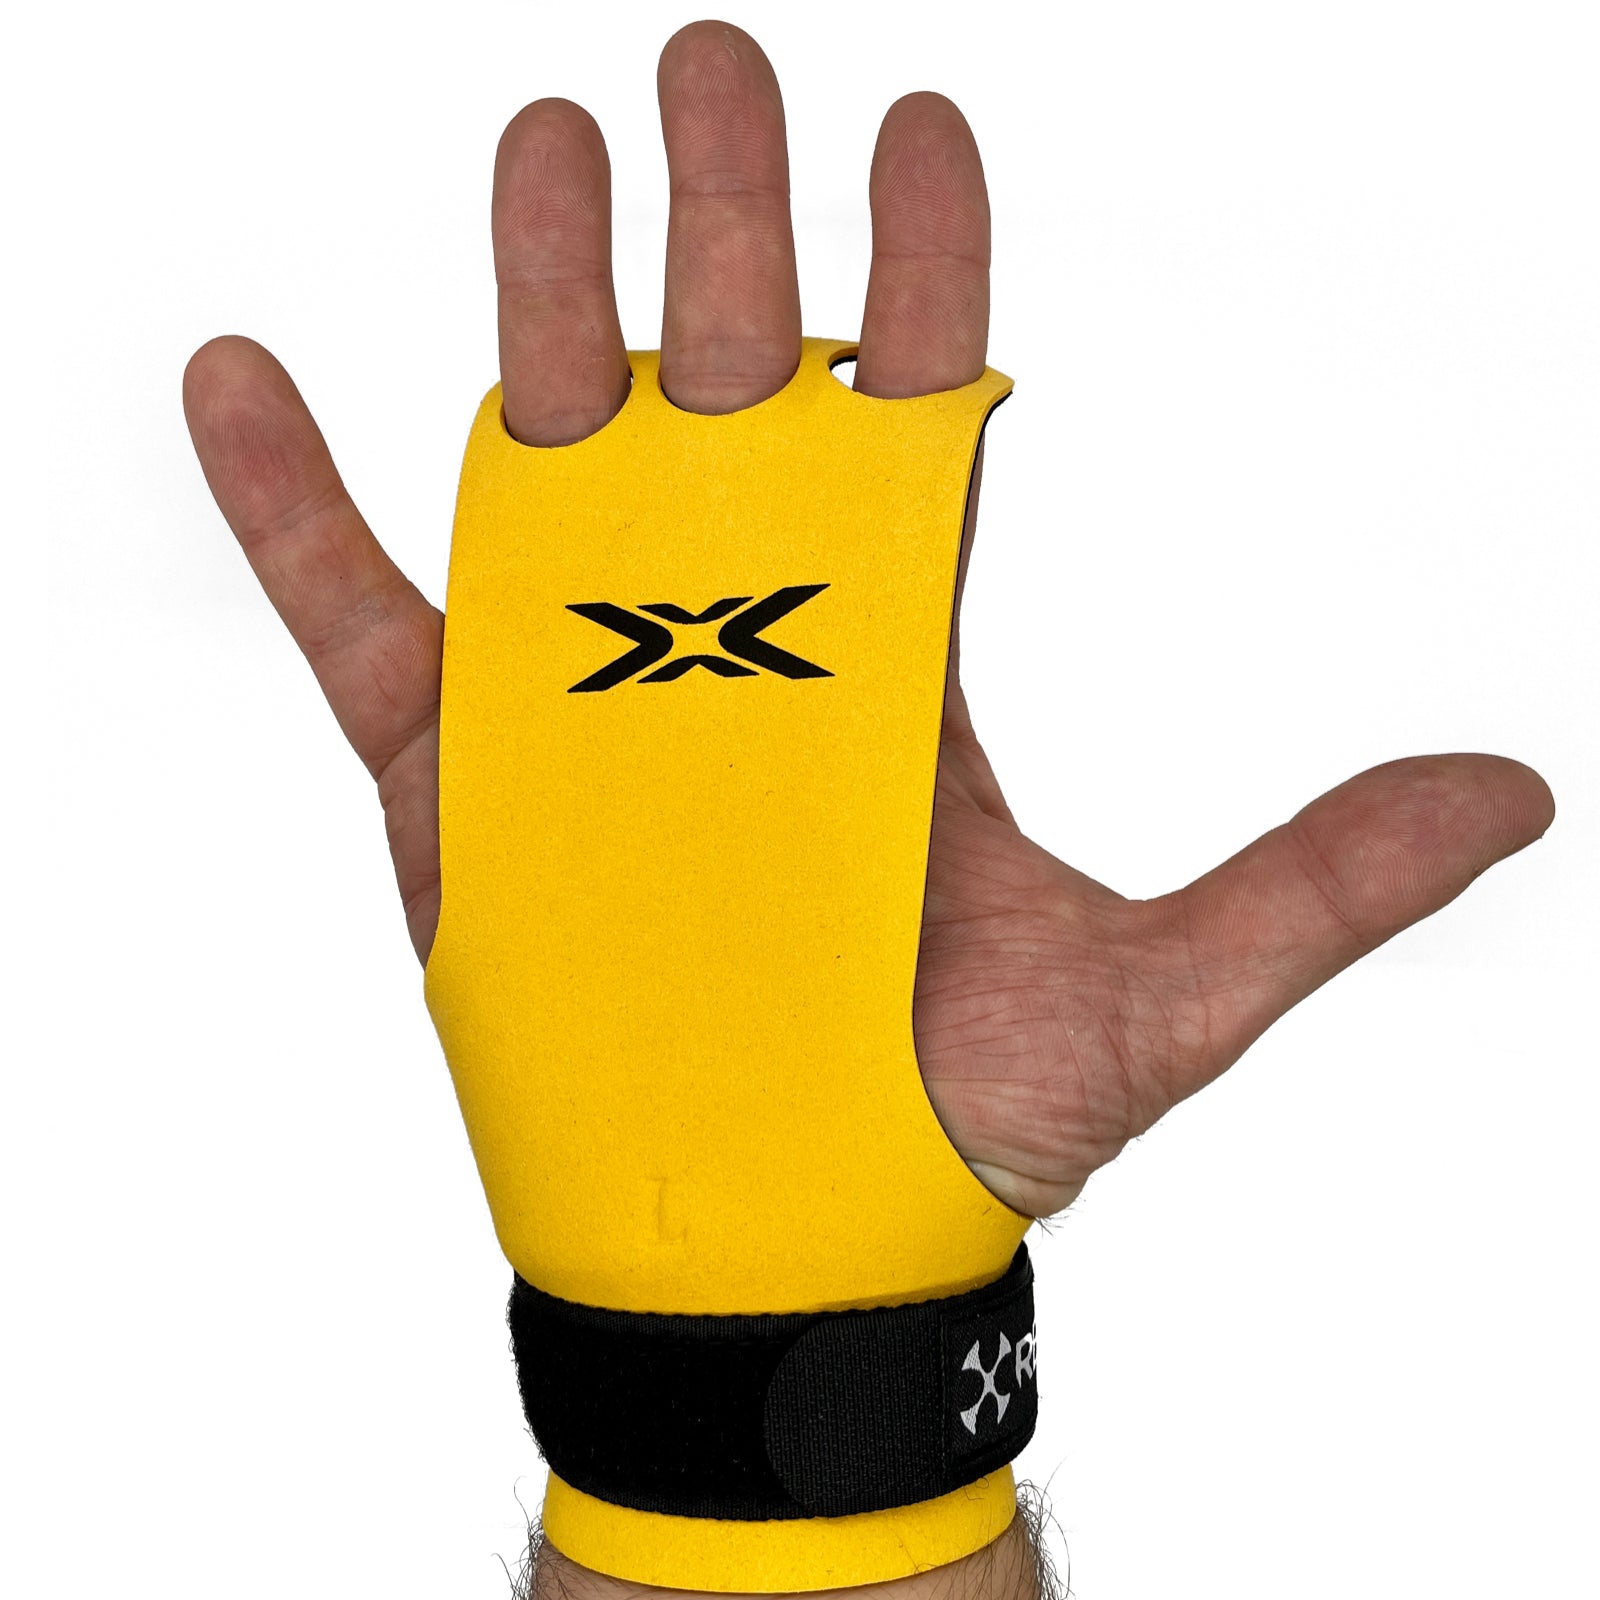 Reyllen X3 BumbleBee Crossfit Gymnastic Hand Grips - 3-hole worn on hand view